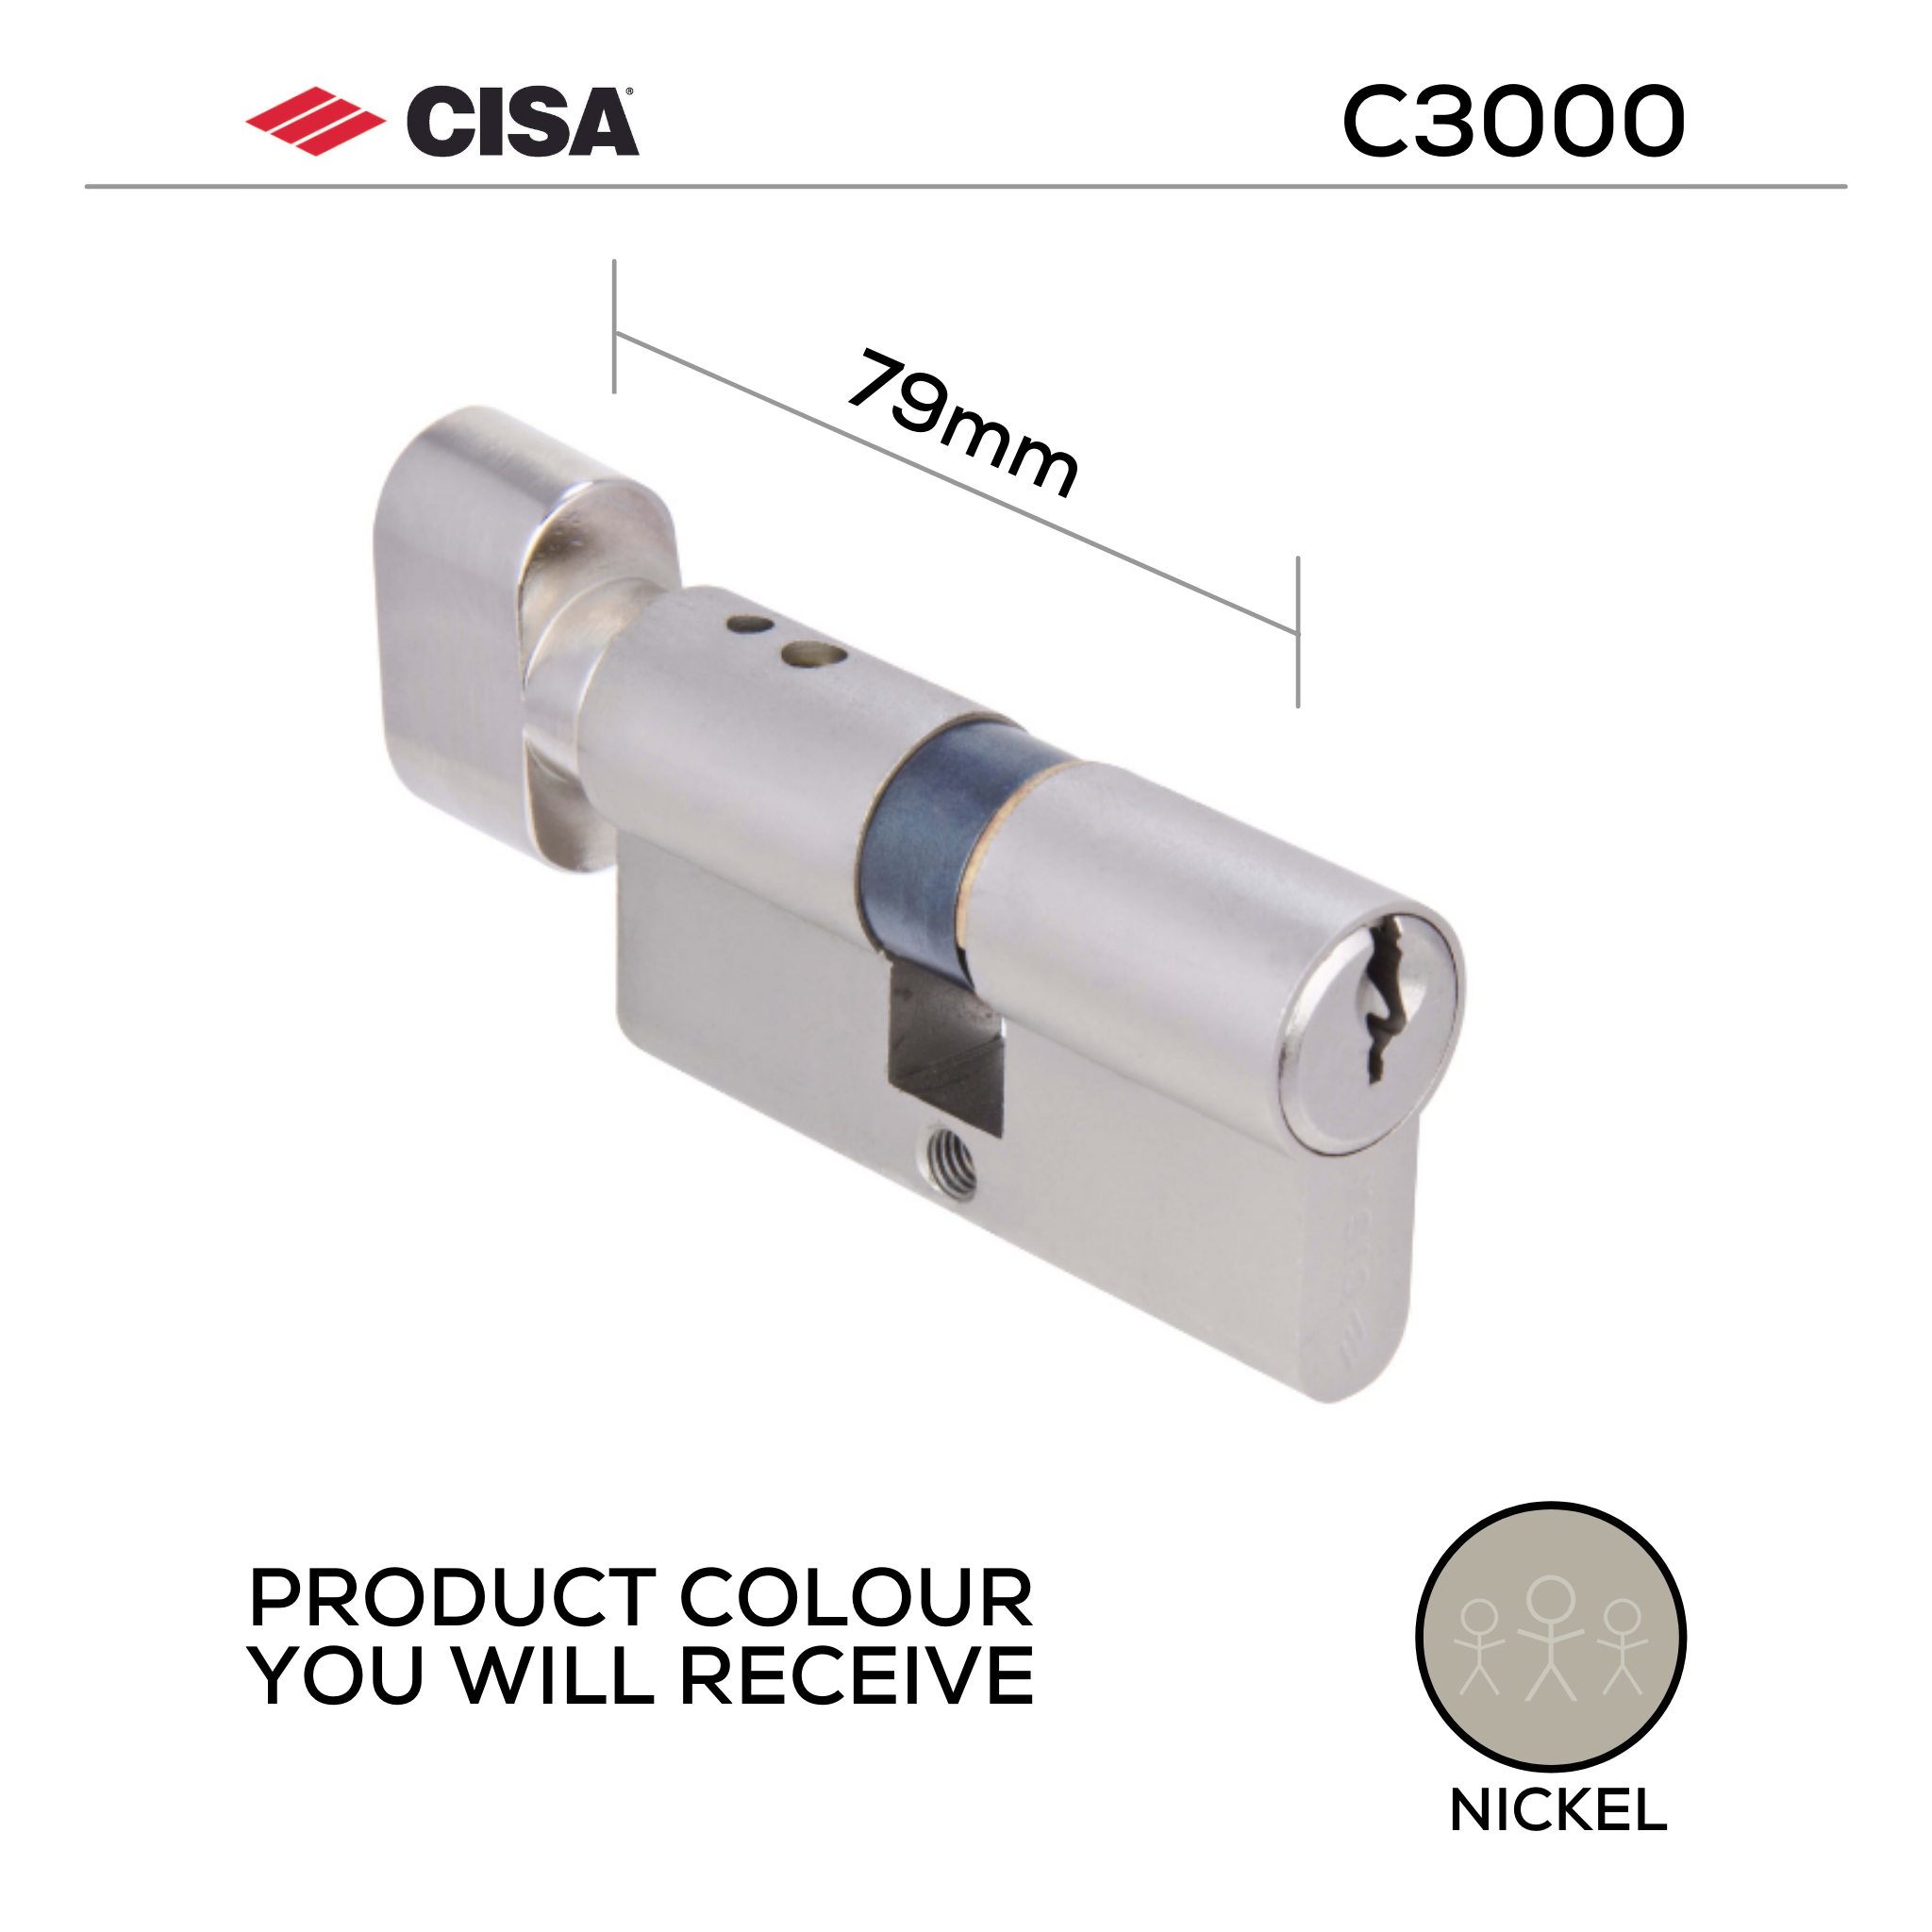 0N312-18-12-KD, 79mm - 39.5/39.5, Double Cylinder, C3000, Thumbturn to Key, Keyed to Differ (Standard), 3 Keys, 6 Pin, Nickel, CISA